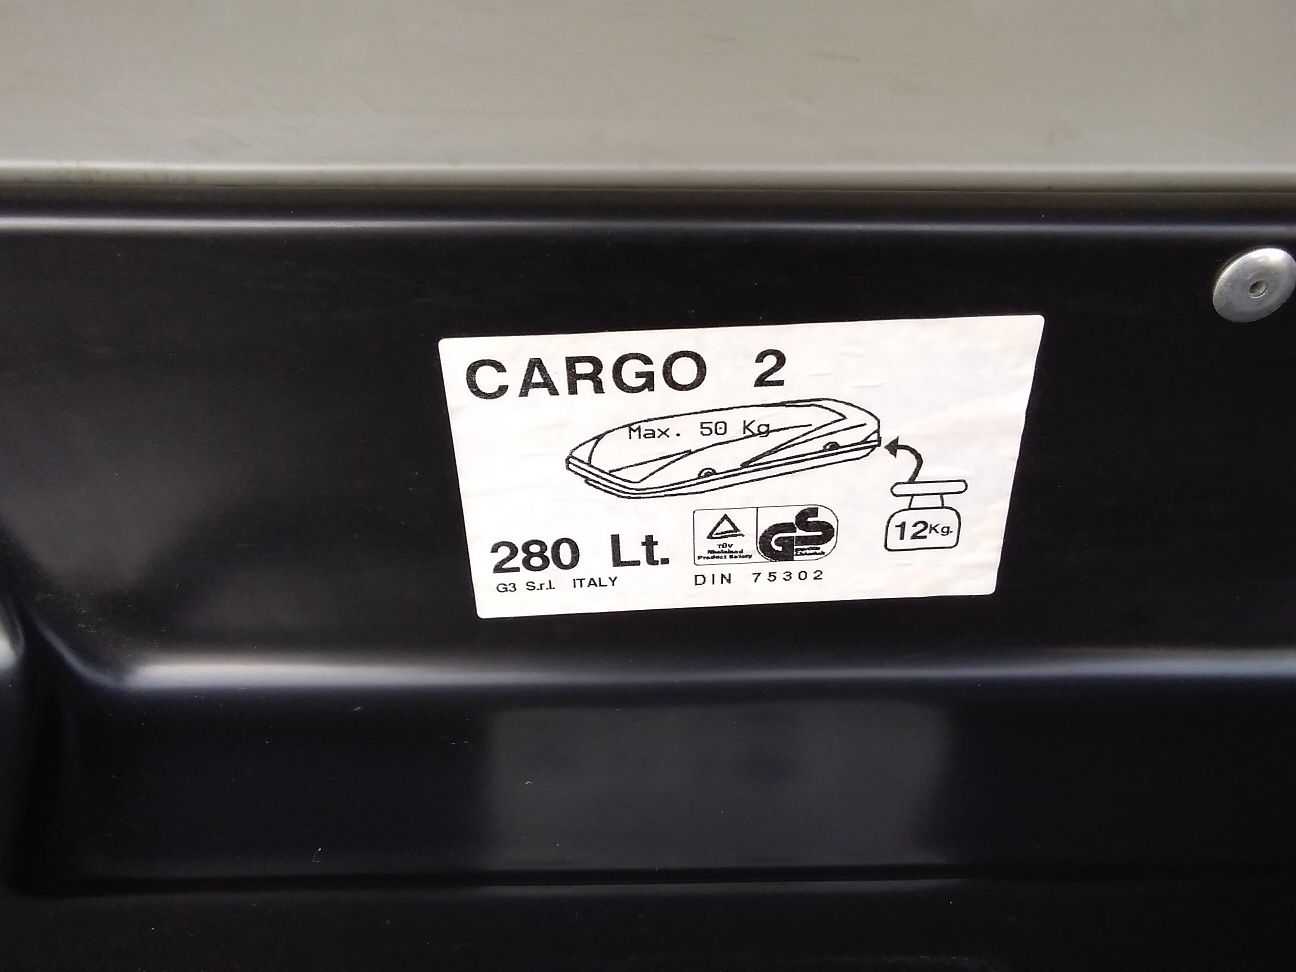 INTER PACK, Cargo 2, G3 Italy, bardzo długi box na narty i wędki, PST